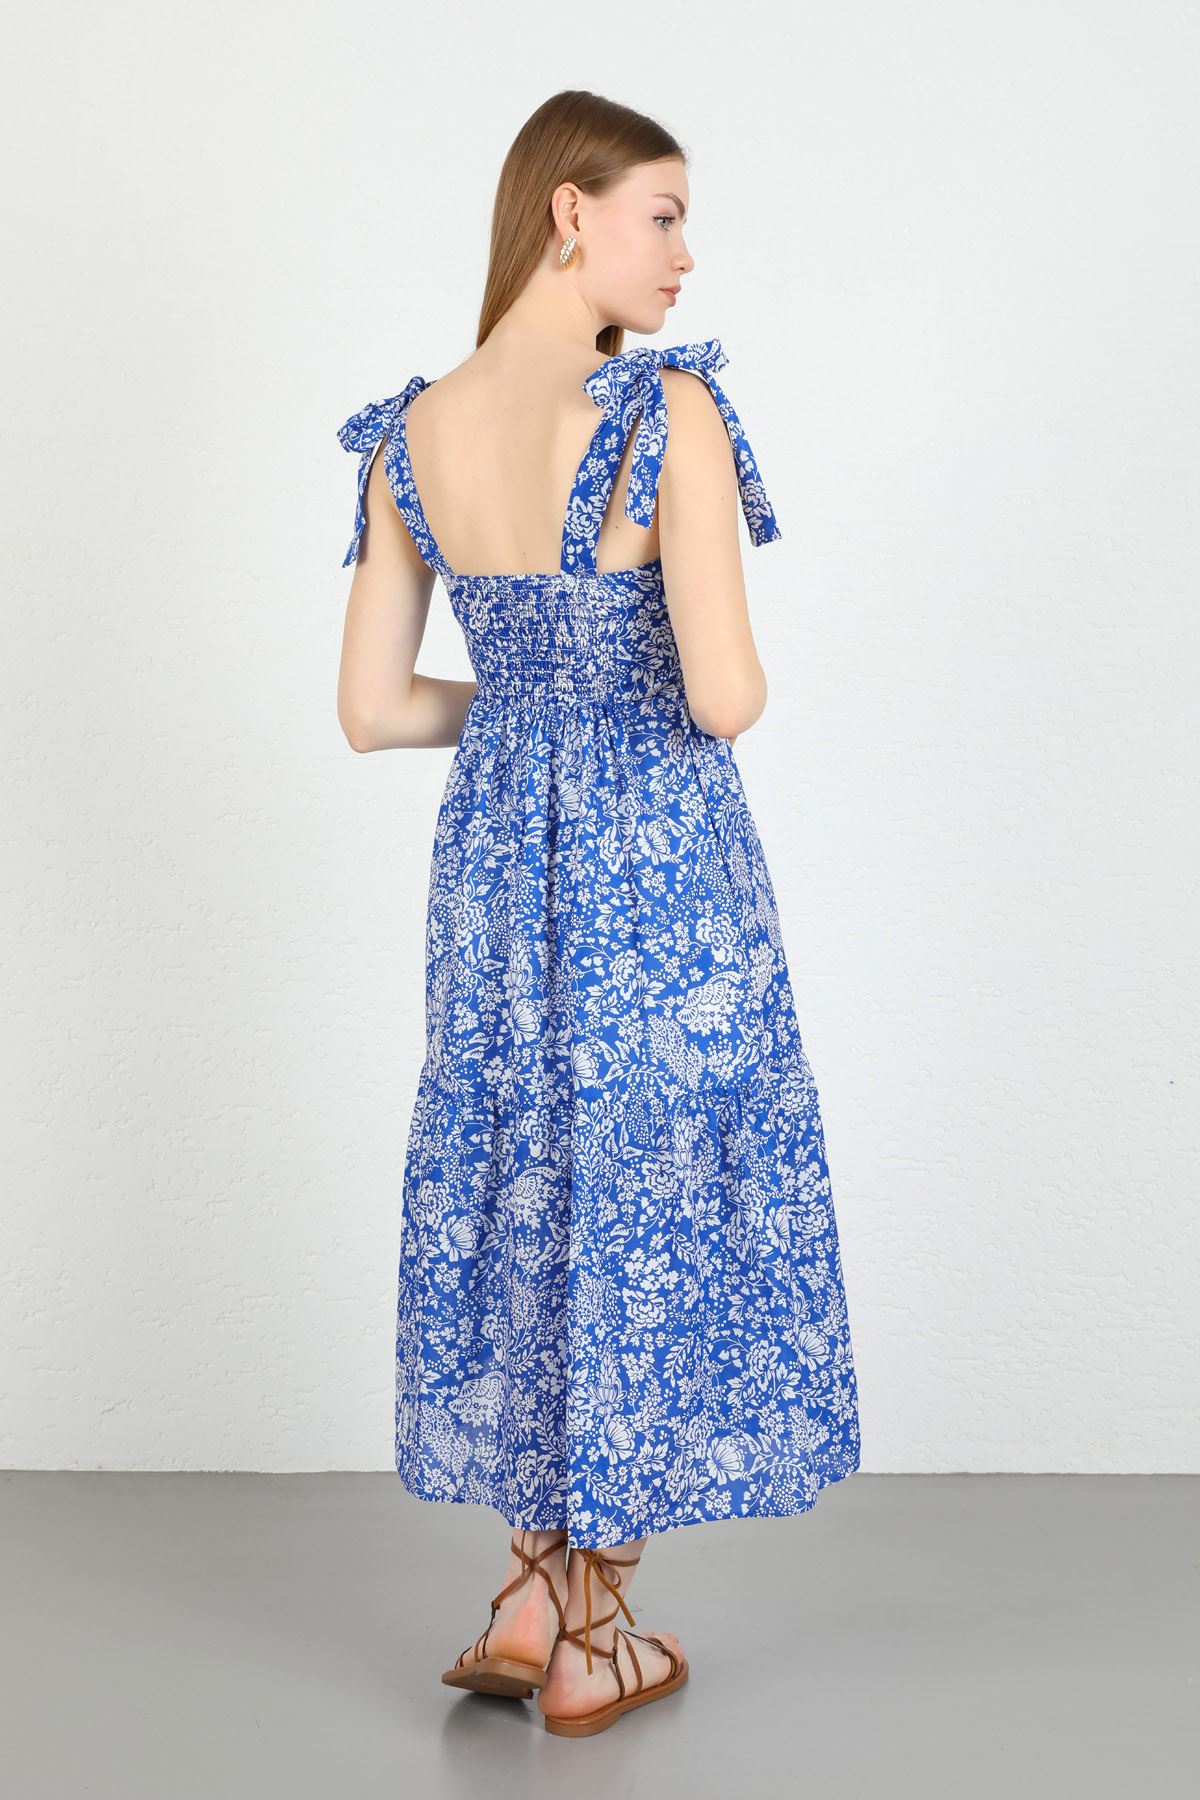 Vual Fabric Square Neck Floral Print Tied Shoulder Women Dress - Dark Blue